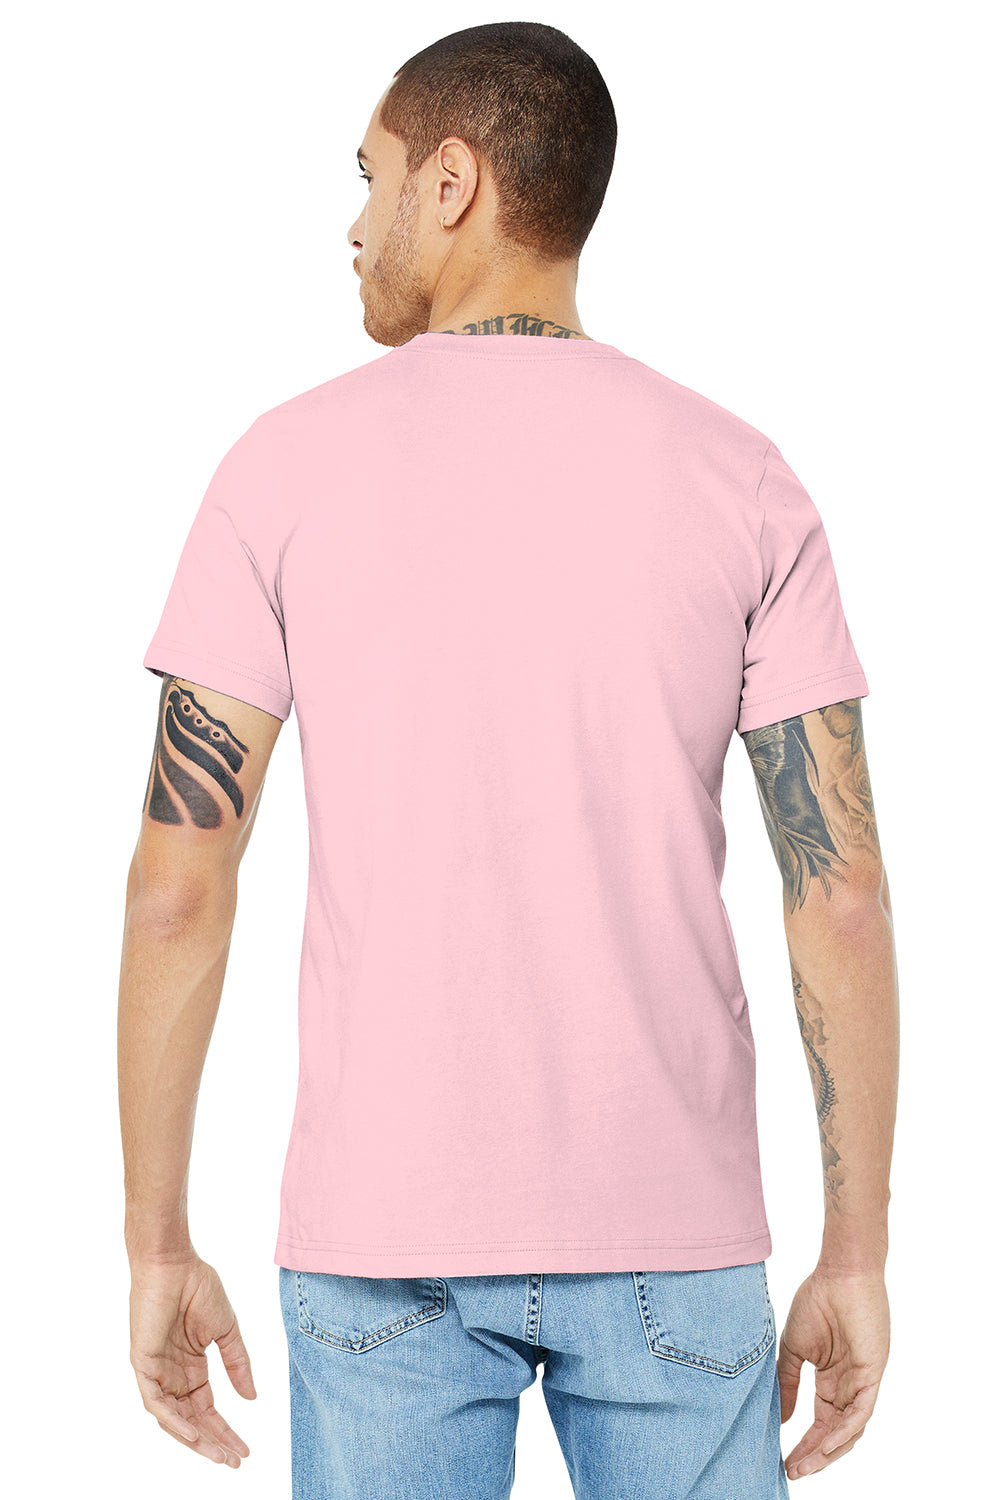 Bella + Canvas BC3001/3001C Mens Jersey Short Sleeve Crewneck T-Shirt Pink Model Back